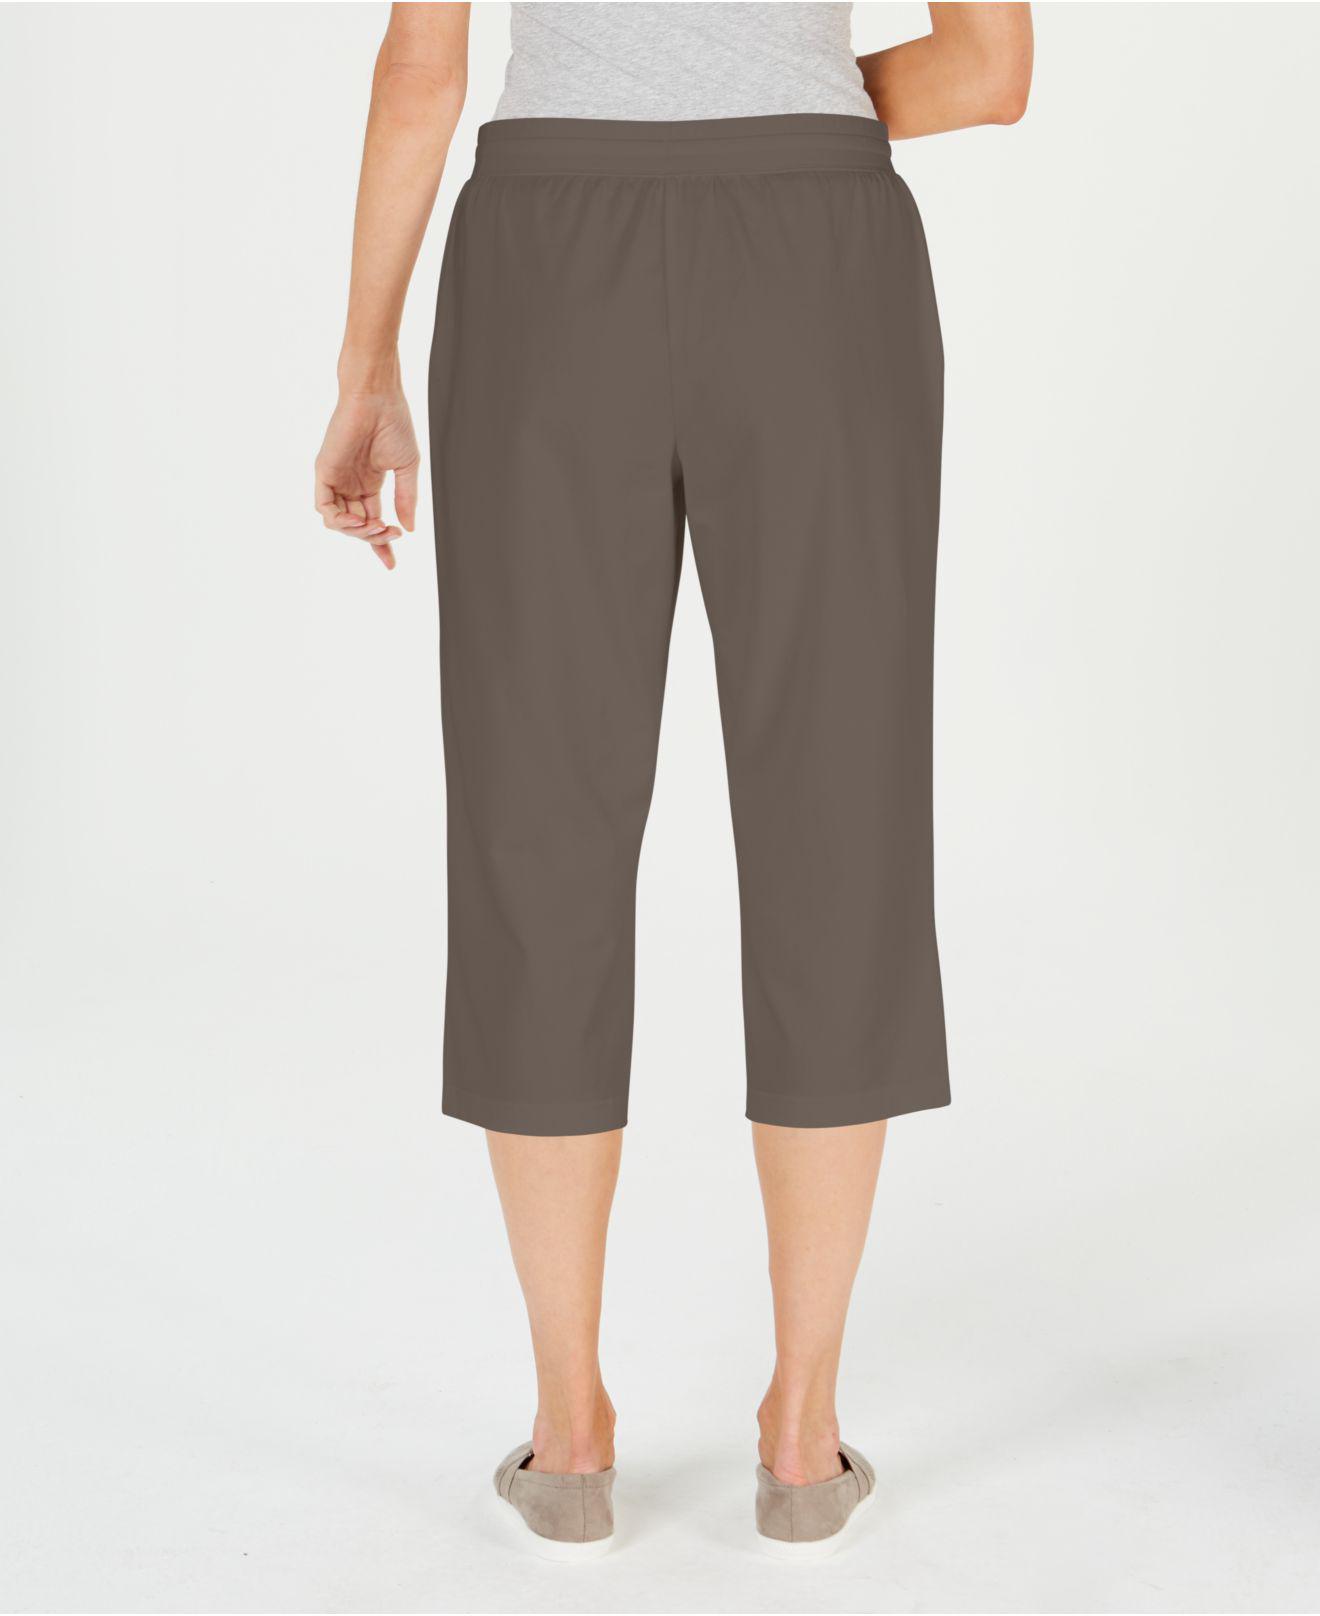 Lyst - Karen Scott Knit Drawstring Capri Pants, Created For Macy's in Brown